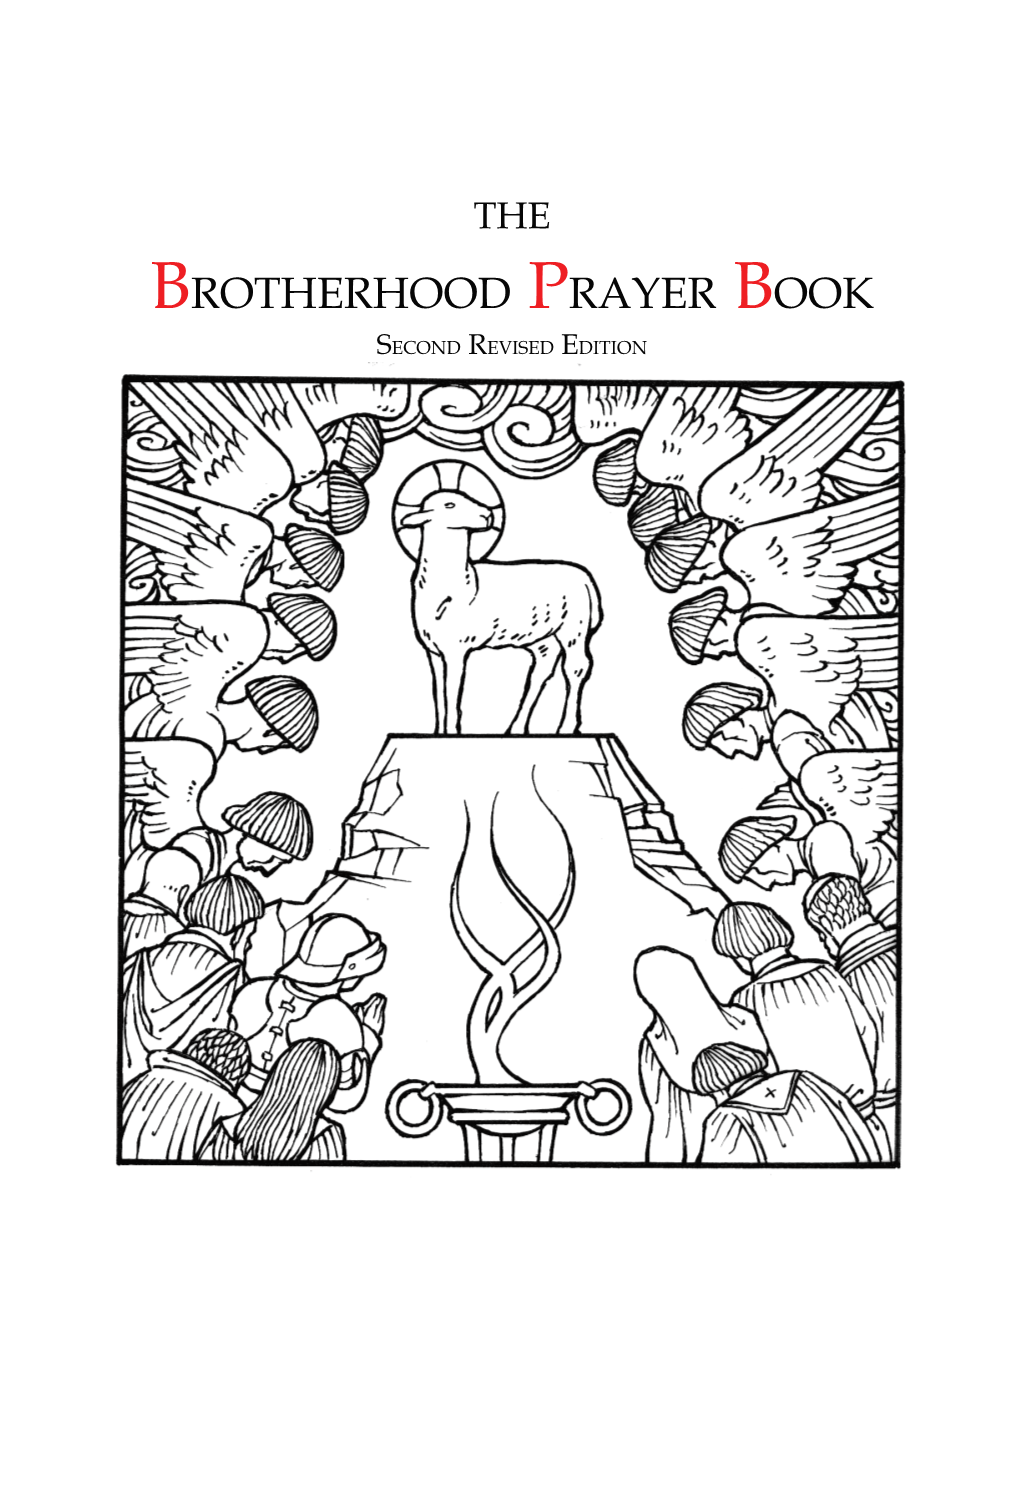 BROTHERHOOD PRAYER BOOK SECOND REVISED EDITION Copyright © 2007 Benjamin T